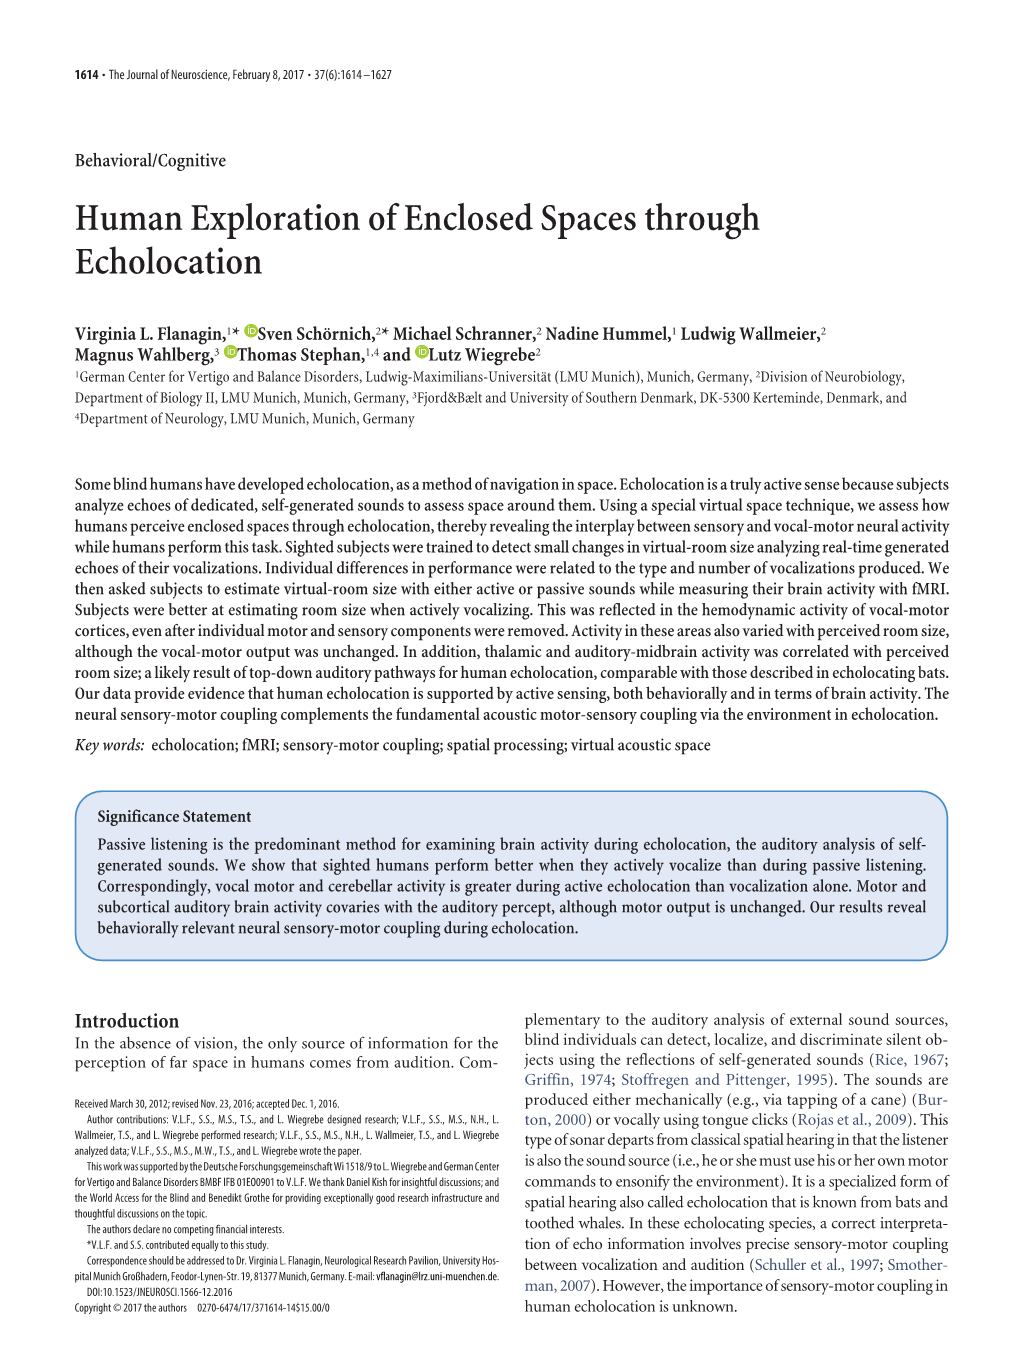 Human Exploration of Enclosed Spaces Through Echolocation